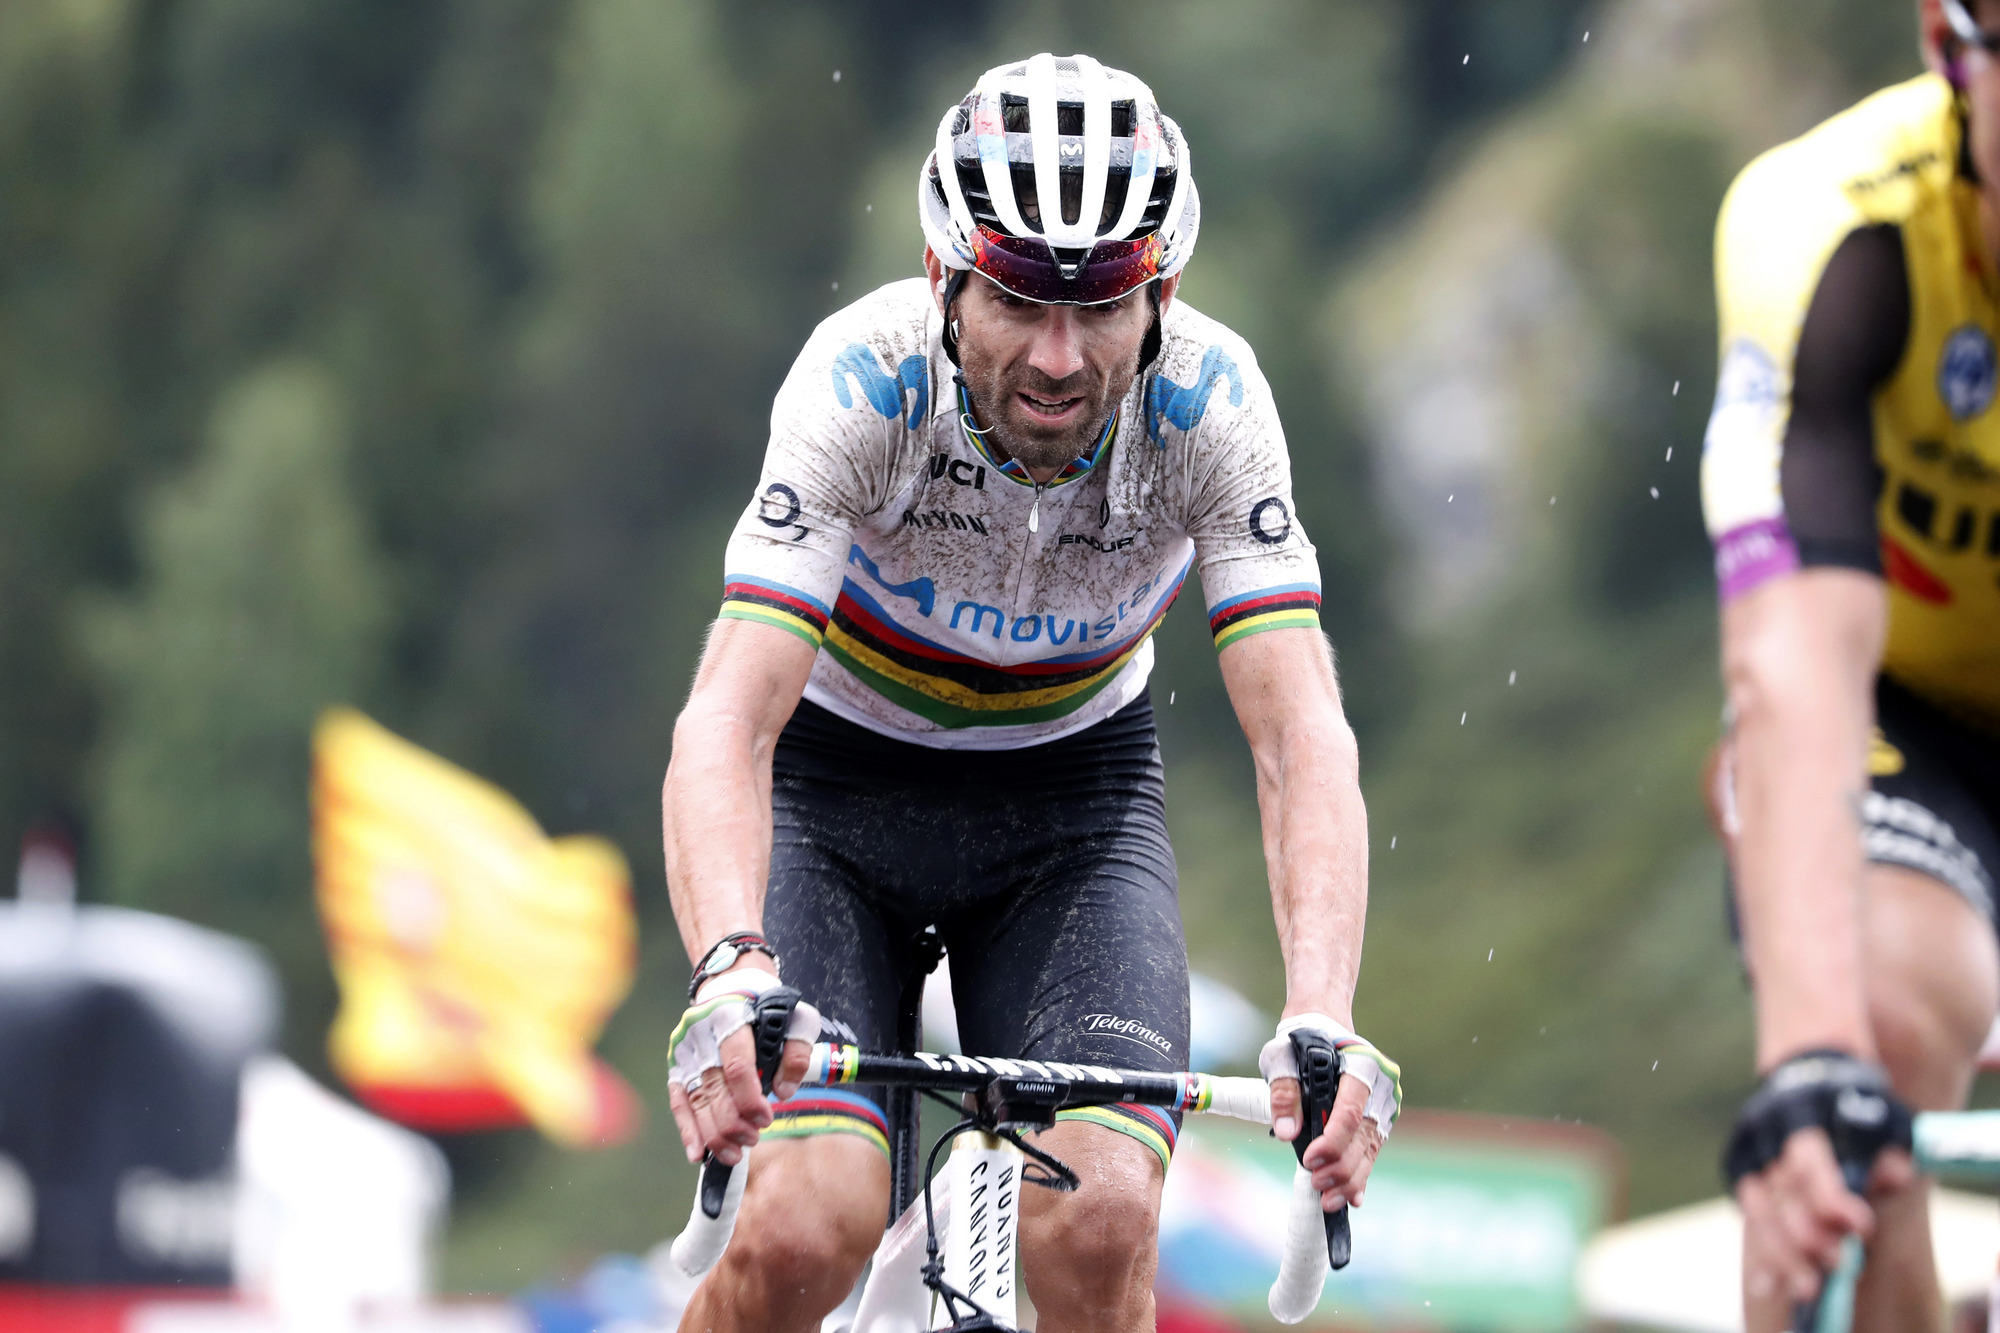 Vuelta a Espana: Pogacar wins stage 9 | Cyclingnews